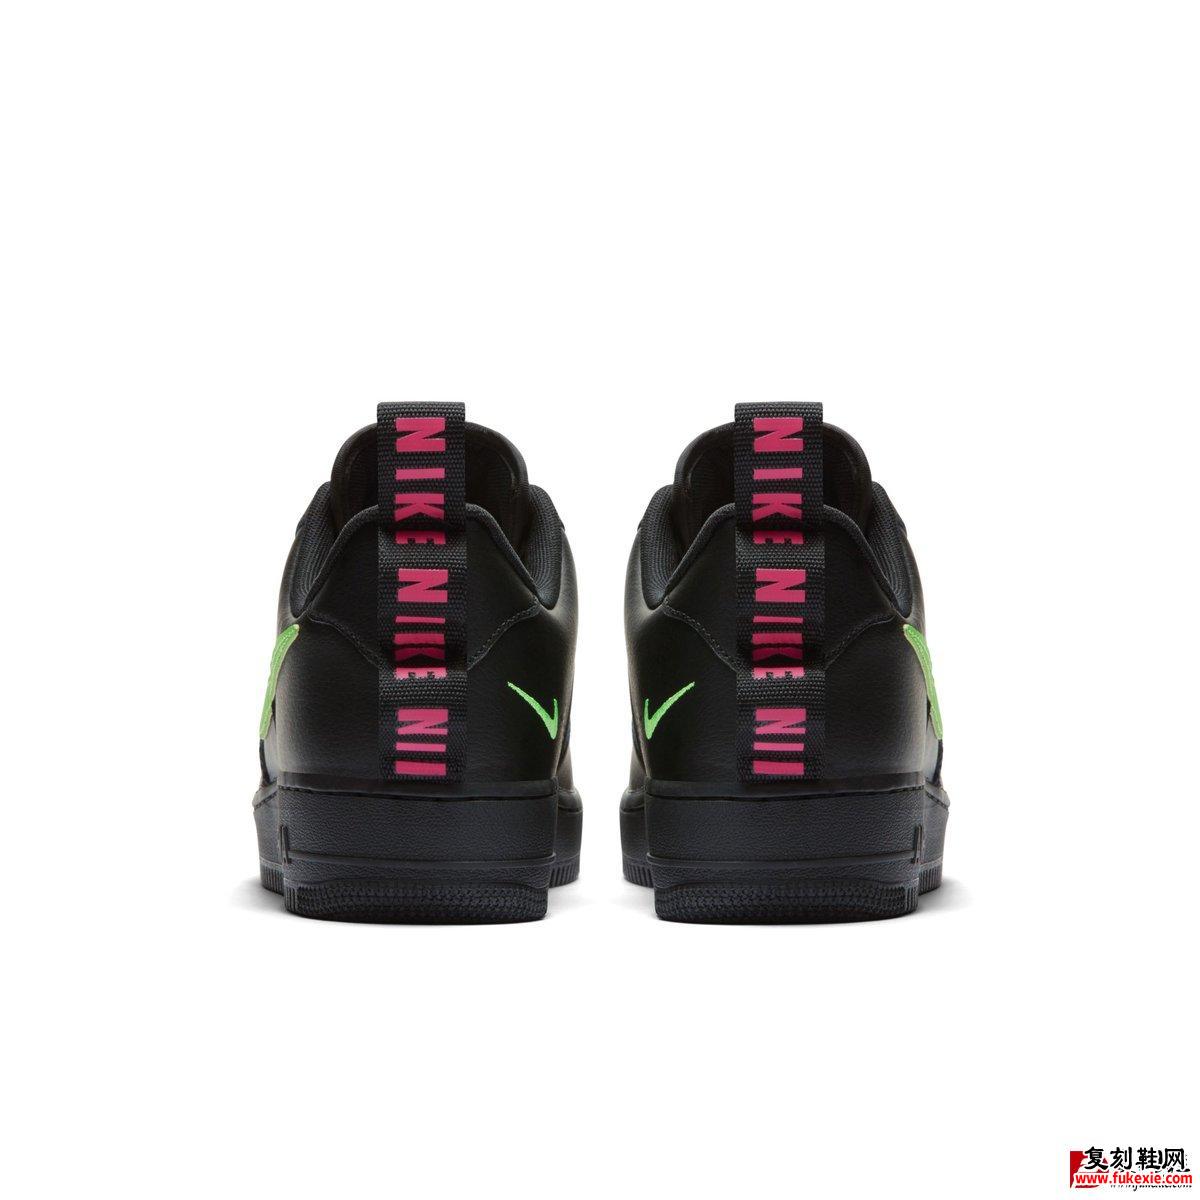 Nike 就为 Air Force 1 Low 带来解构全新鞋型 Air Force 1 '07 LV8 Utility|复刻鞋网 fukexie.com